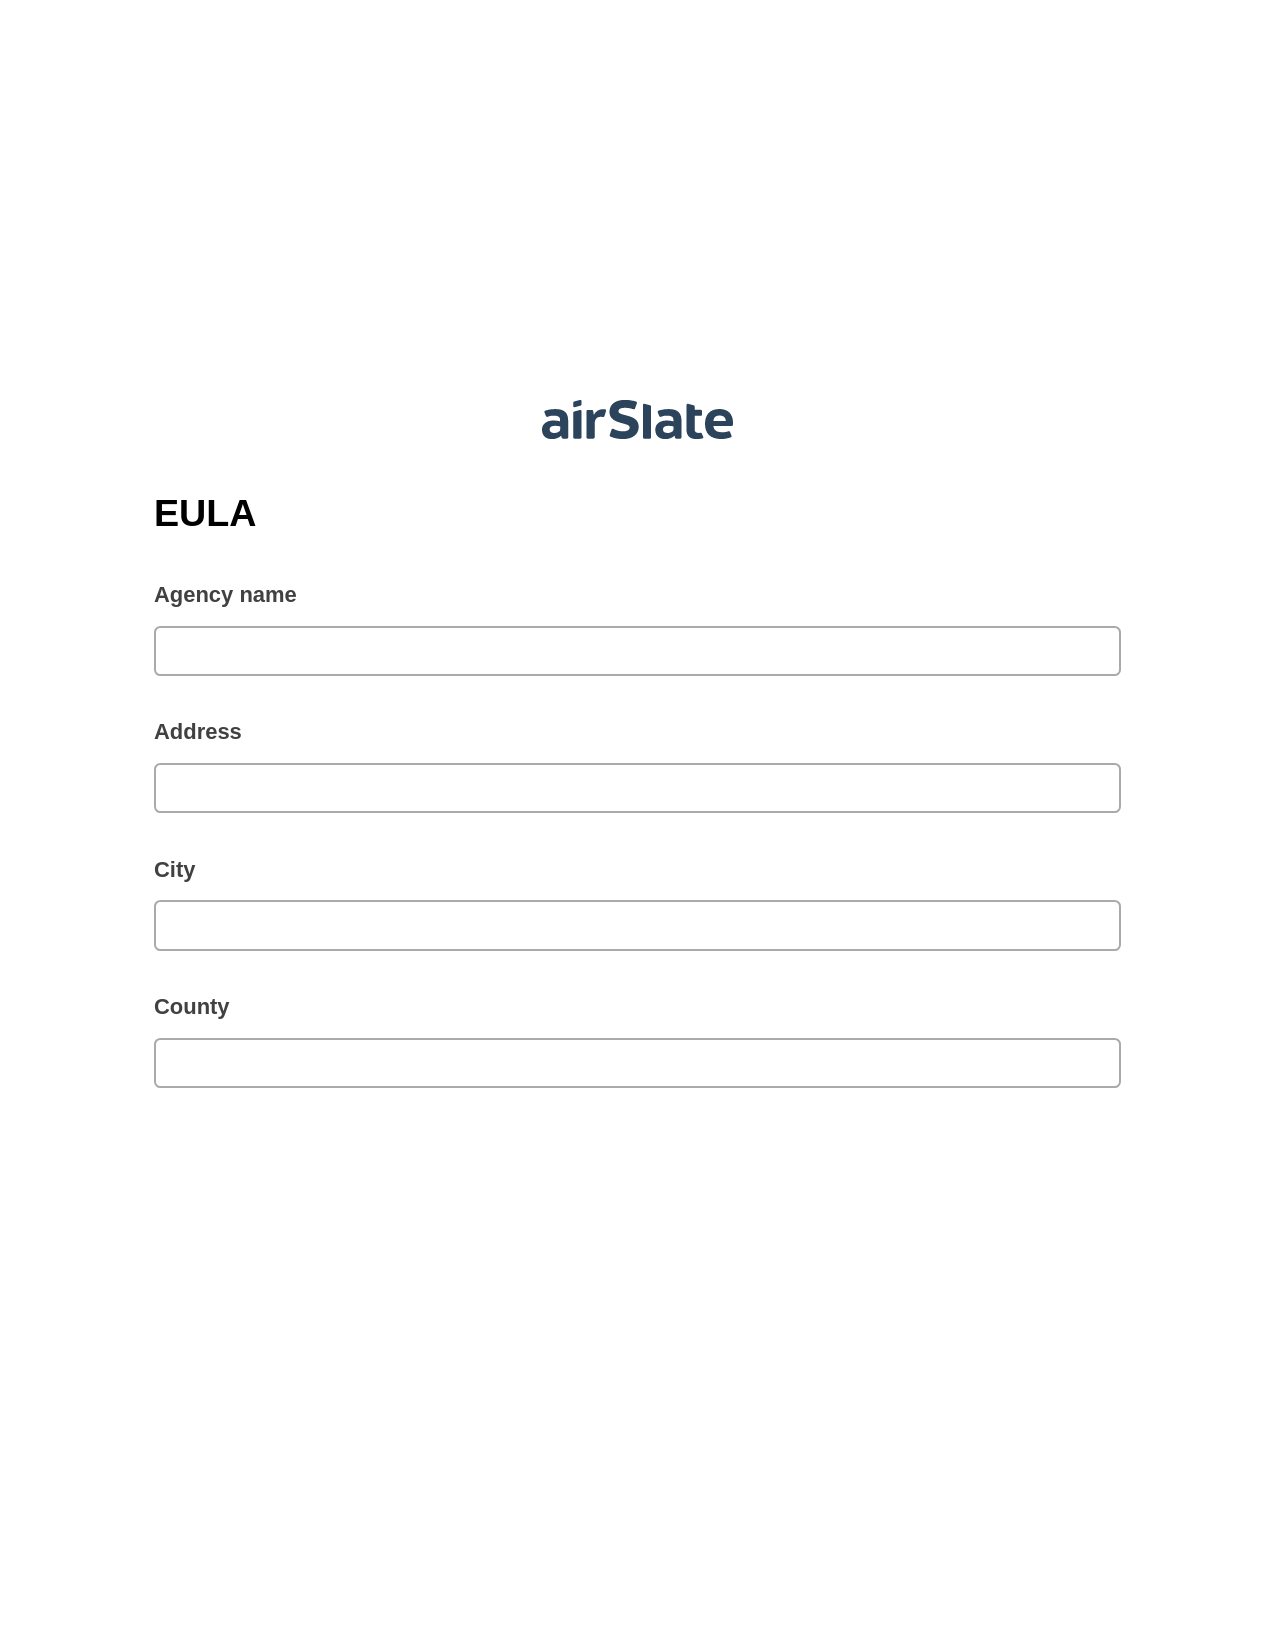 EULA Pre-fill from CSV File Dropdown Options Bot, SendGrid send Campaign bot, Google Drive Bot